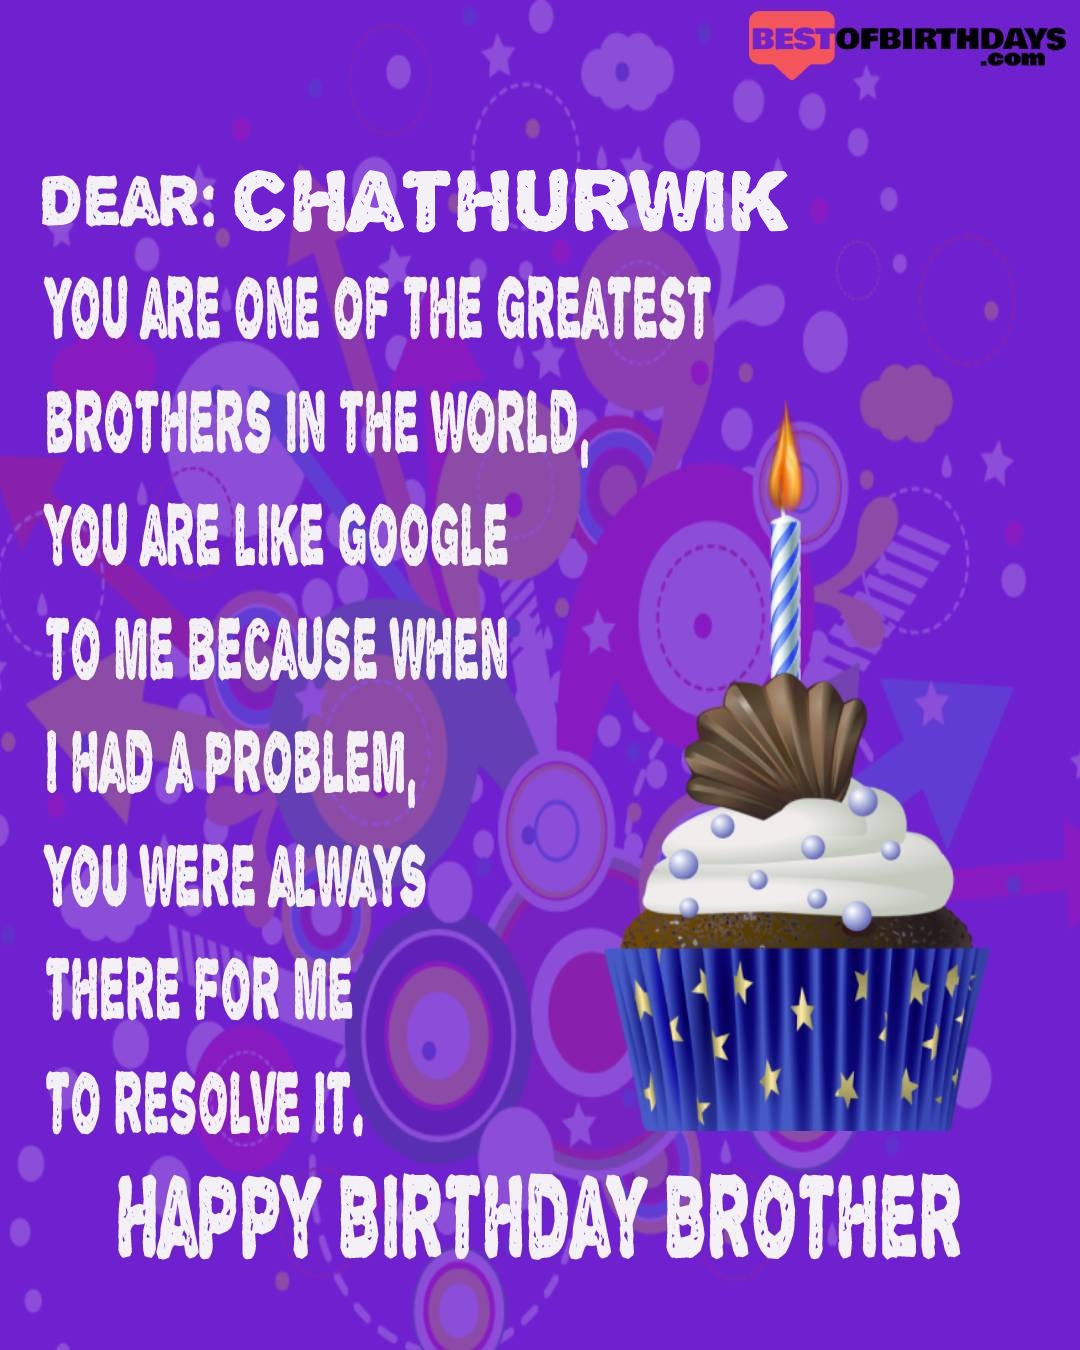 Happy birthday chathurwik bhai brother bro